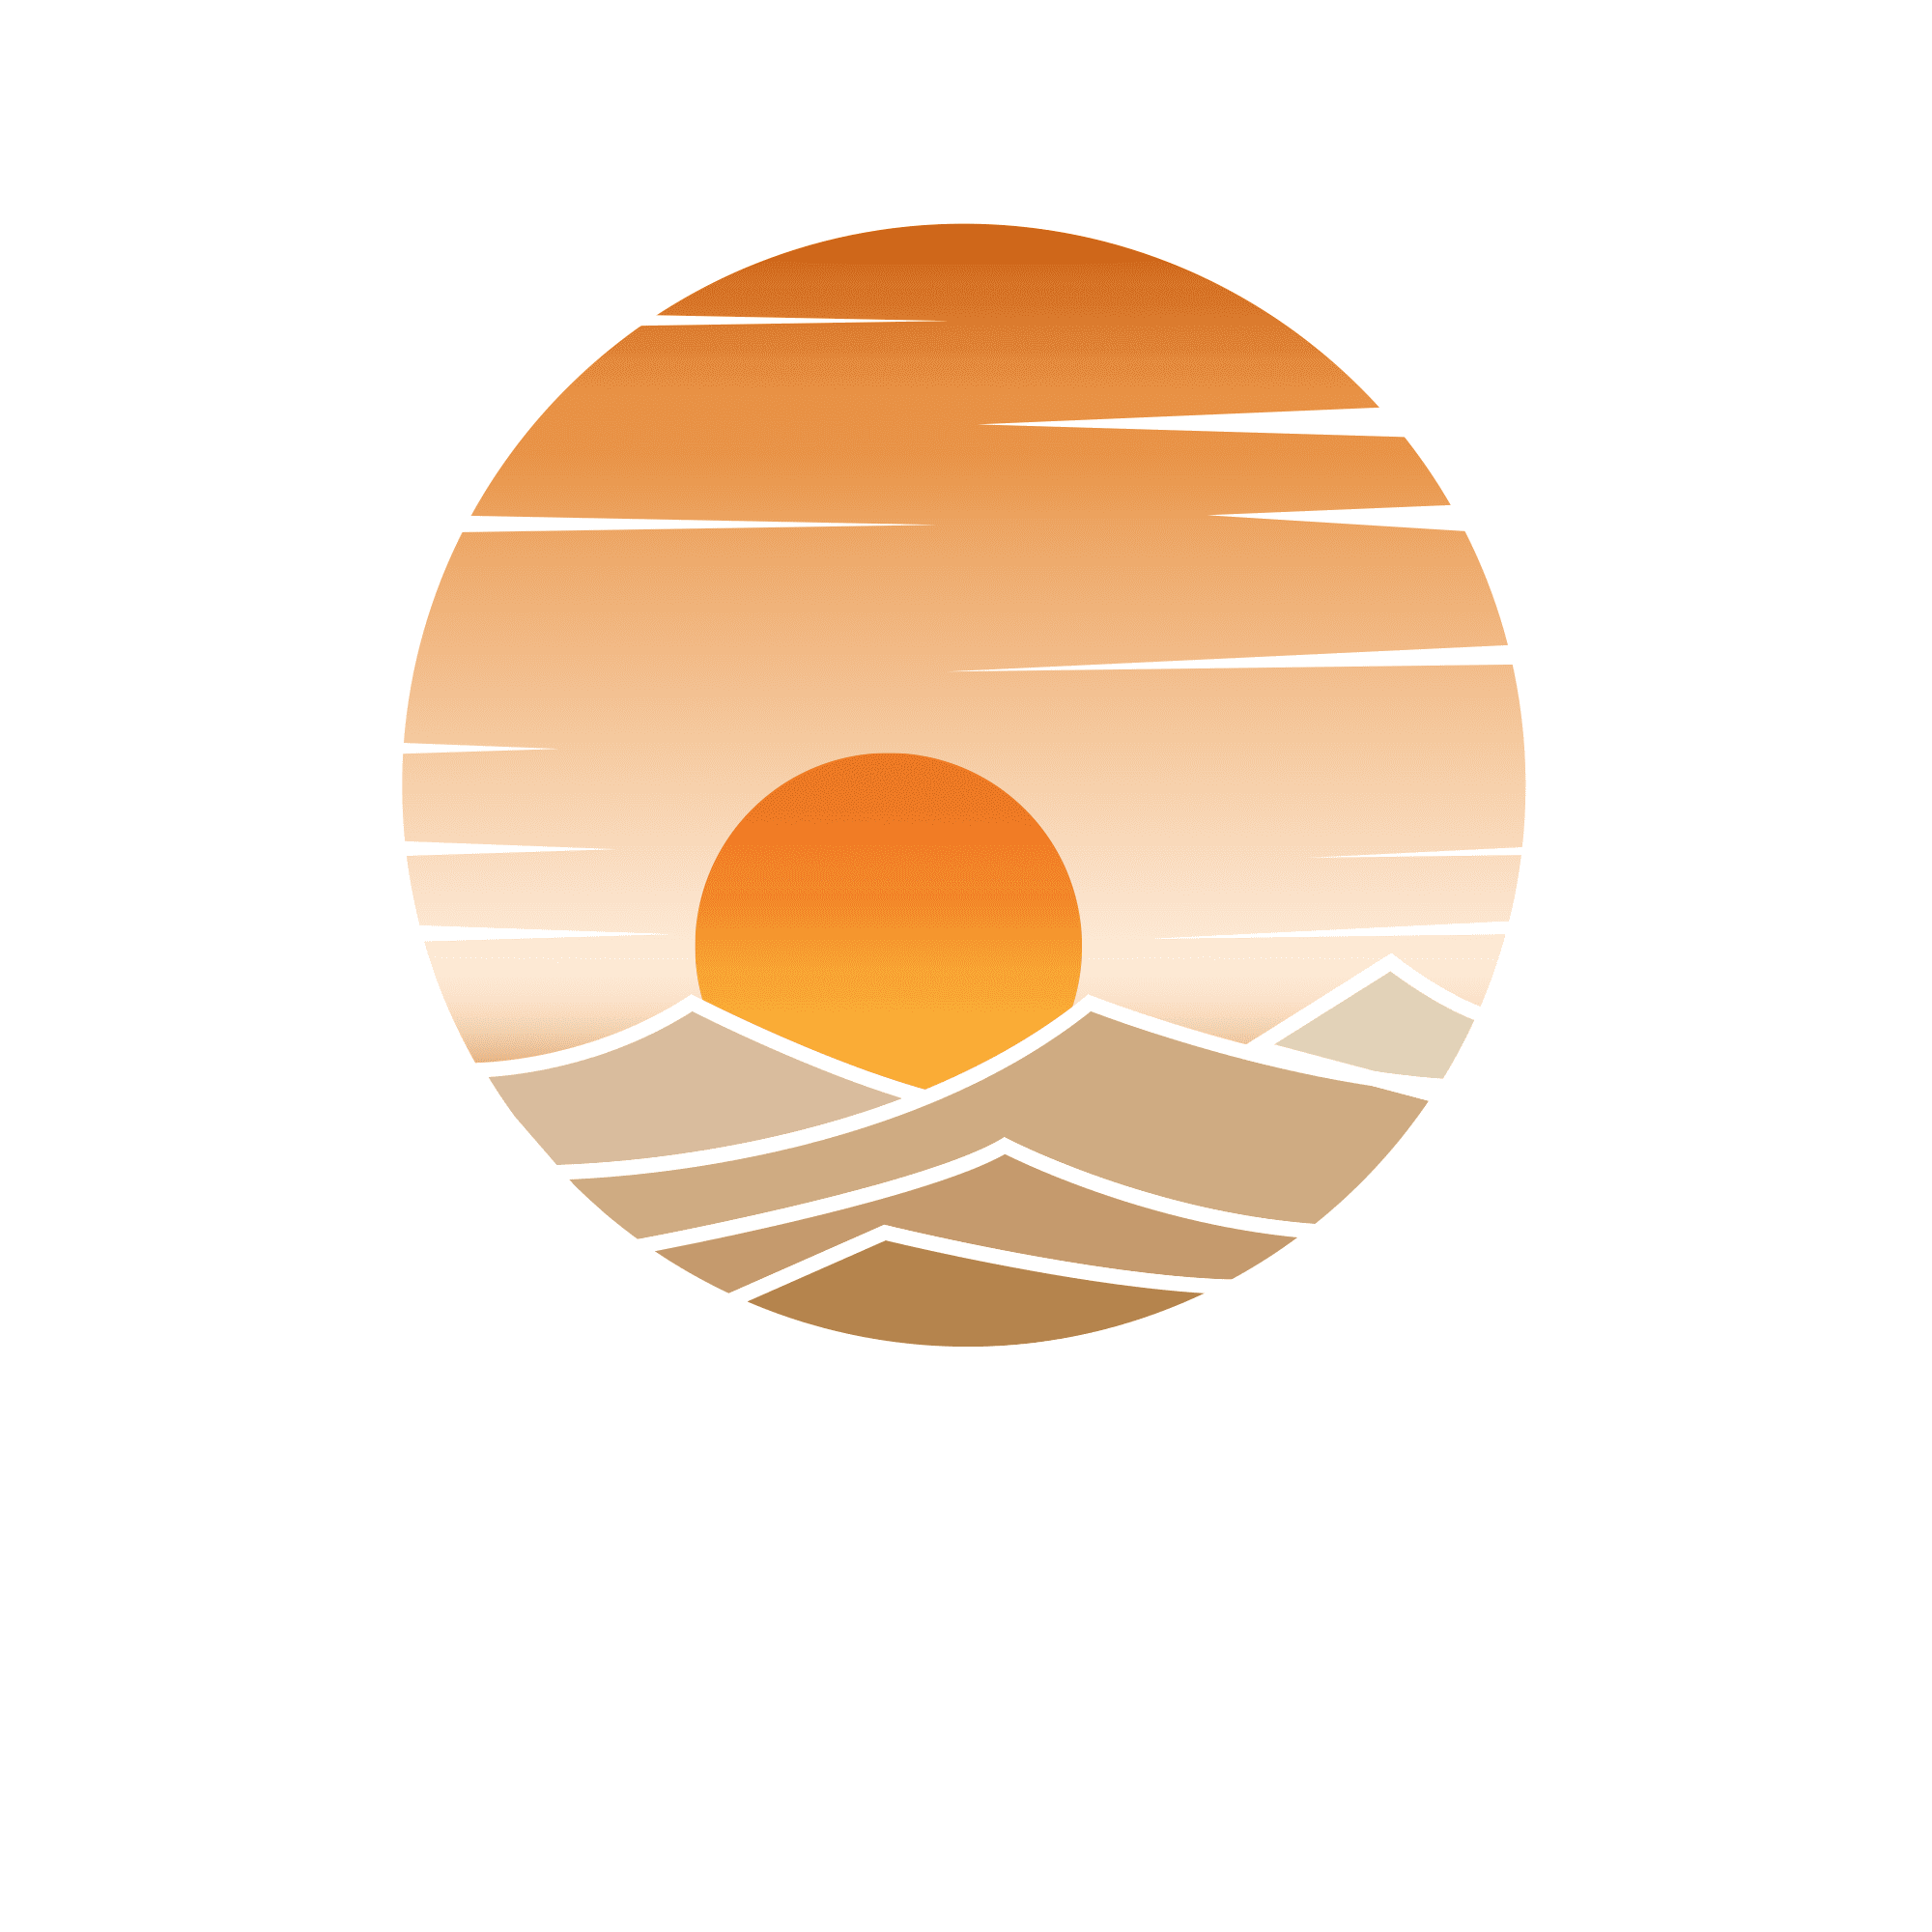 Desert Planet Tourism